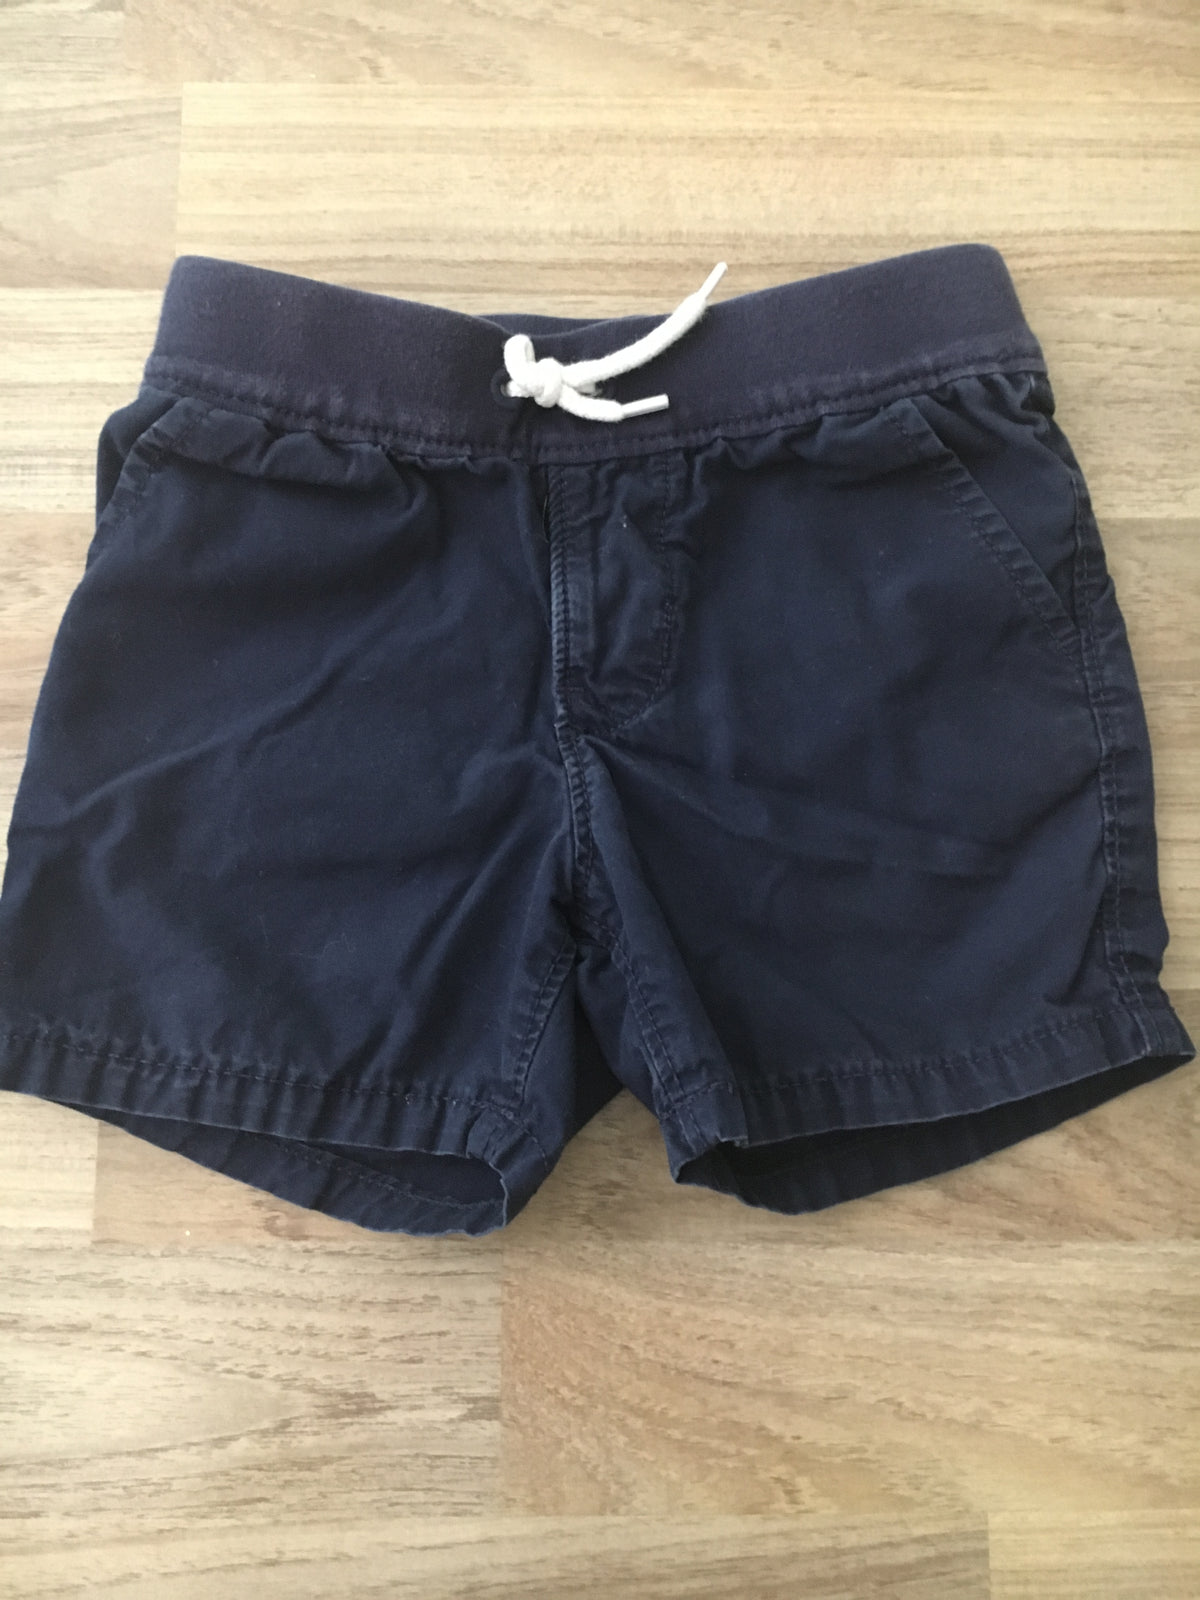 Shorts (Boys Size 18-24M)